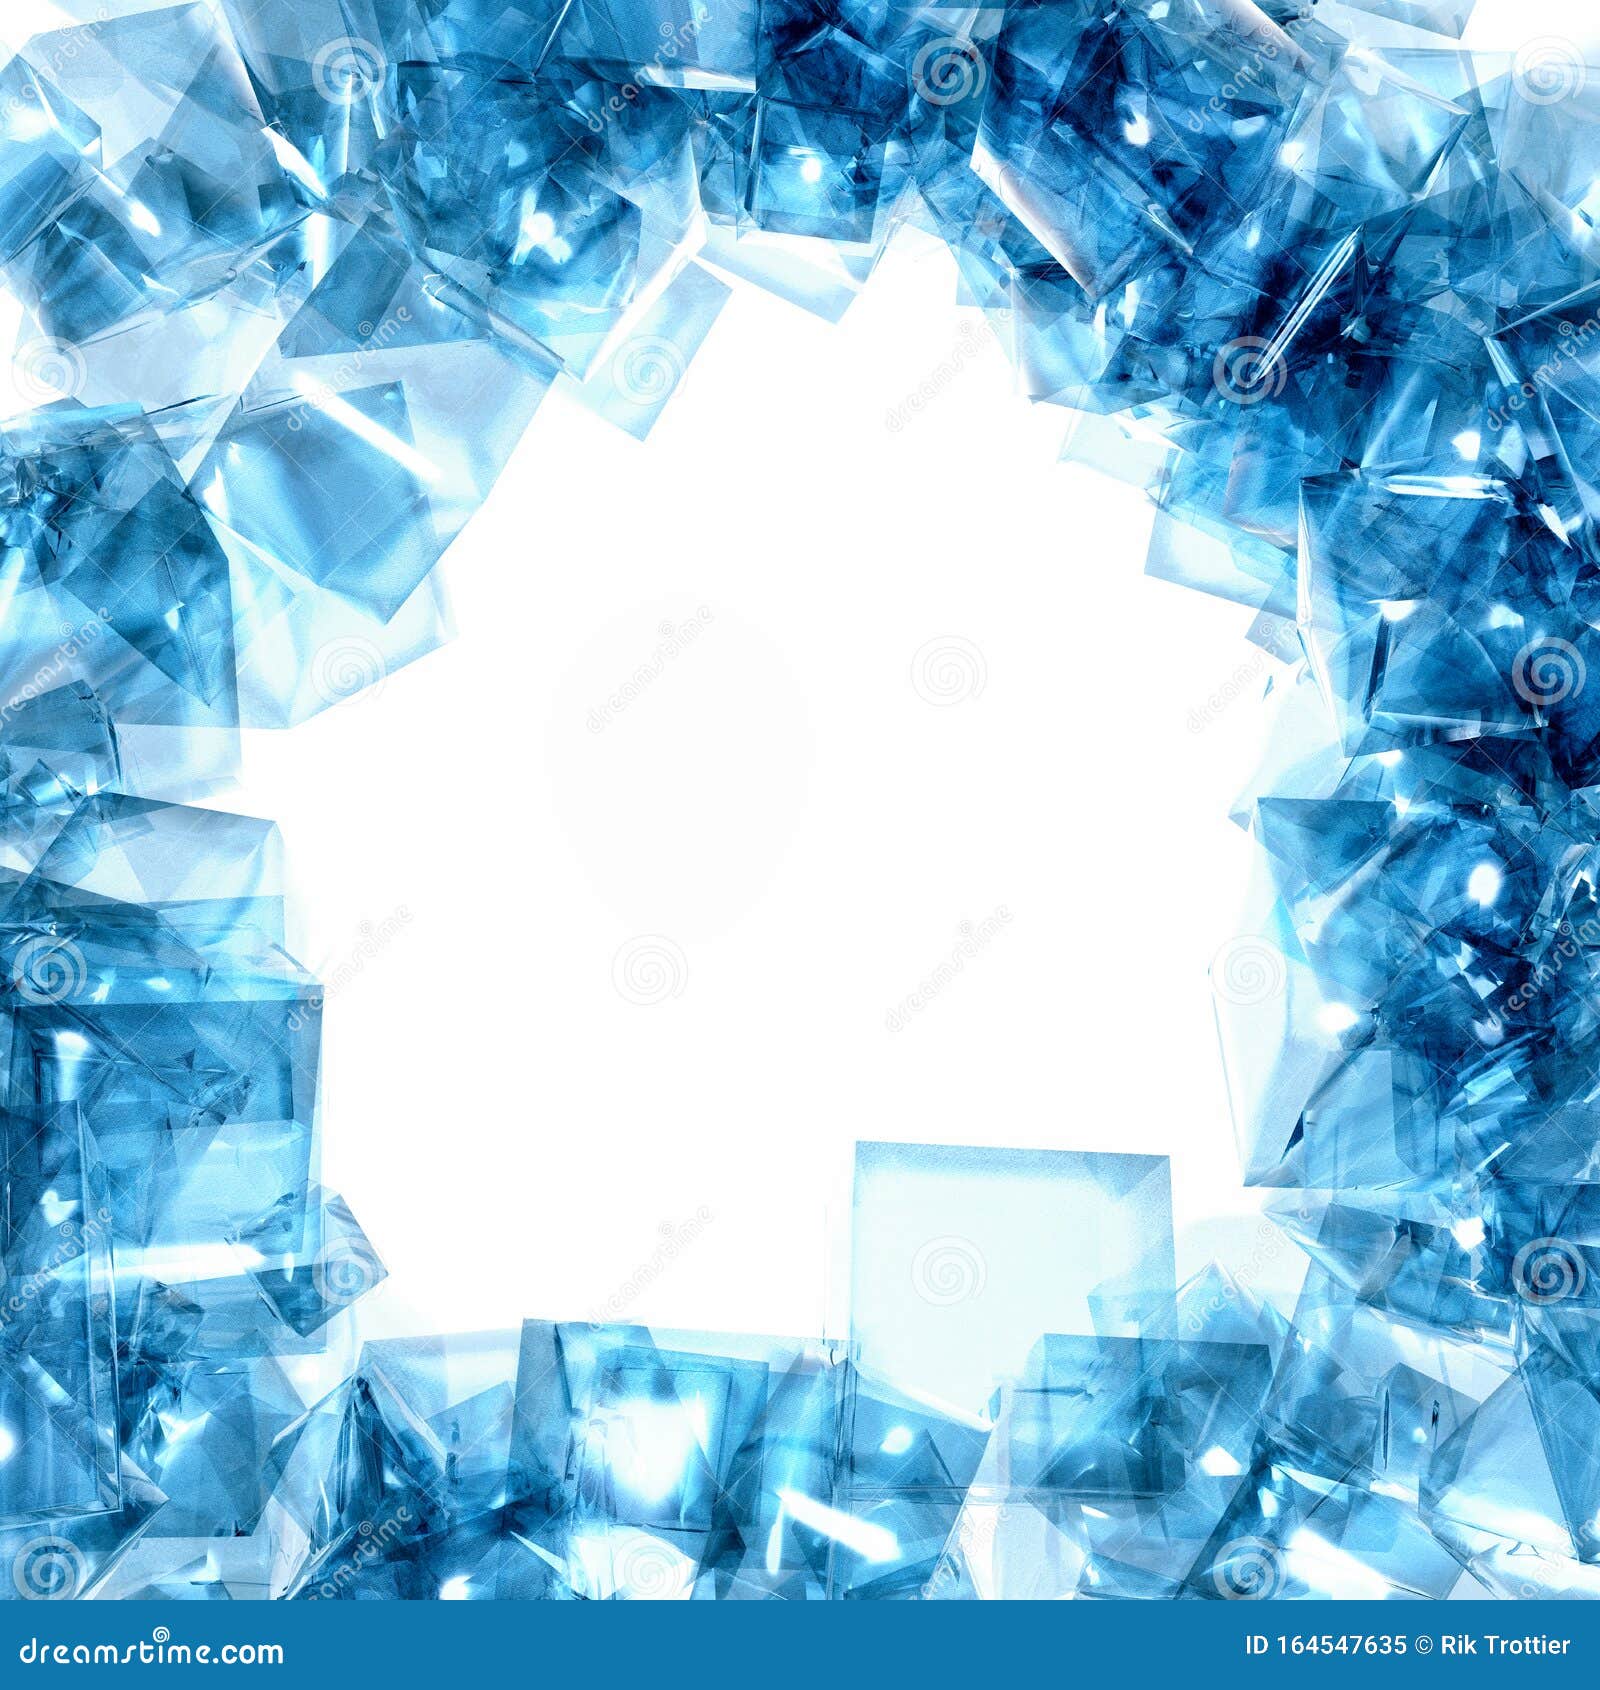 glass-ice-frame-stock-illustration-illustration-of-background-164547635